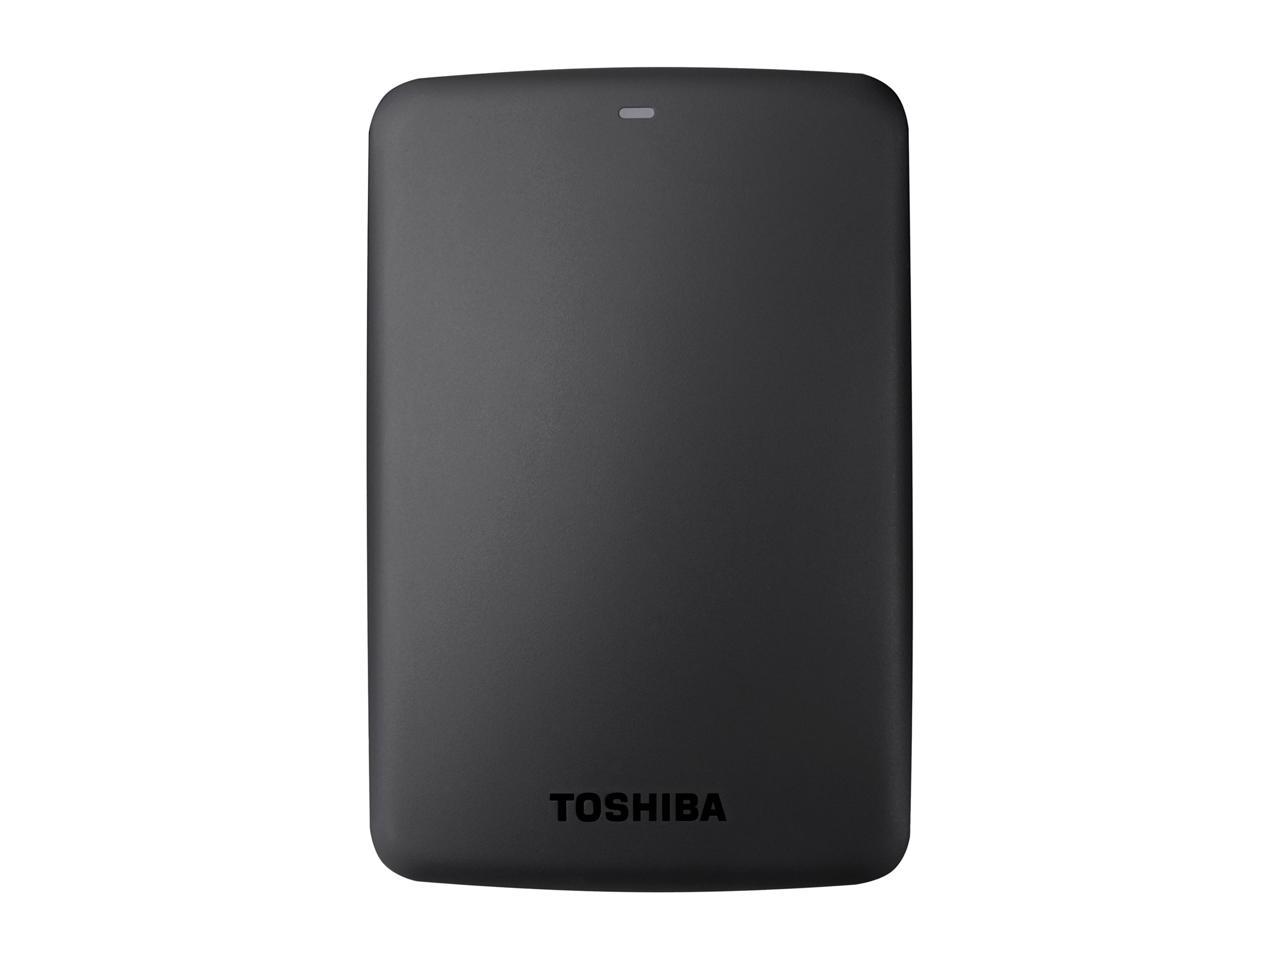 Black Toshiba Canvio Basics 2TB Portable External HDD - USB 3.0 at